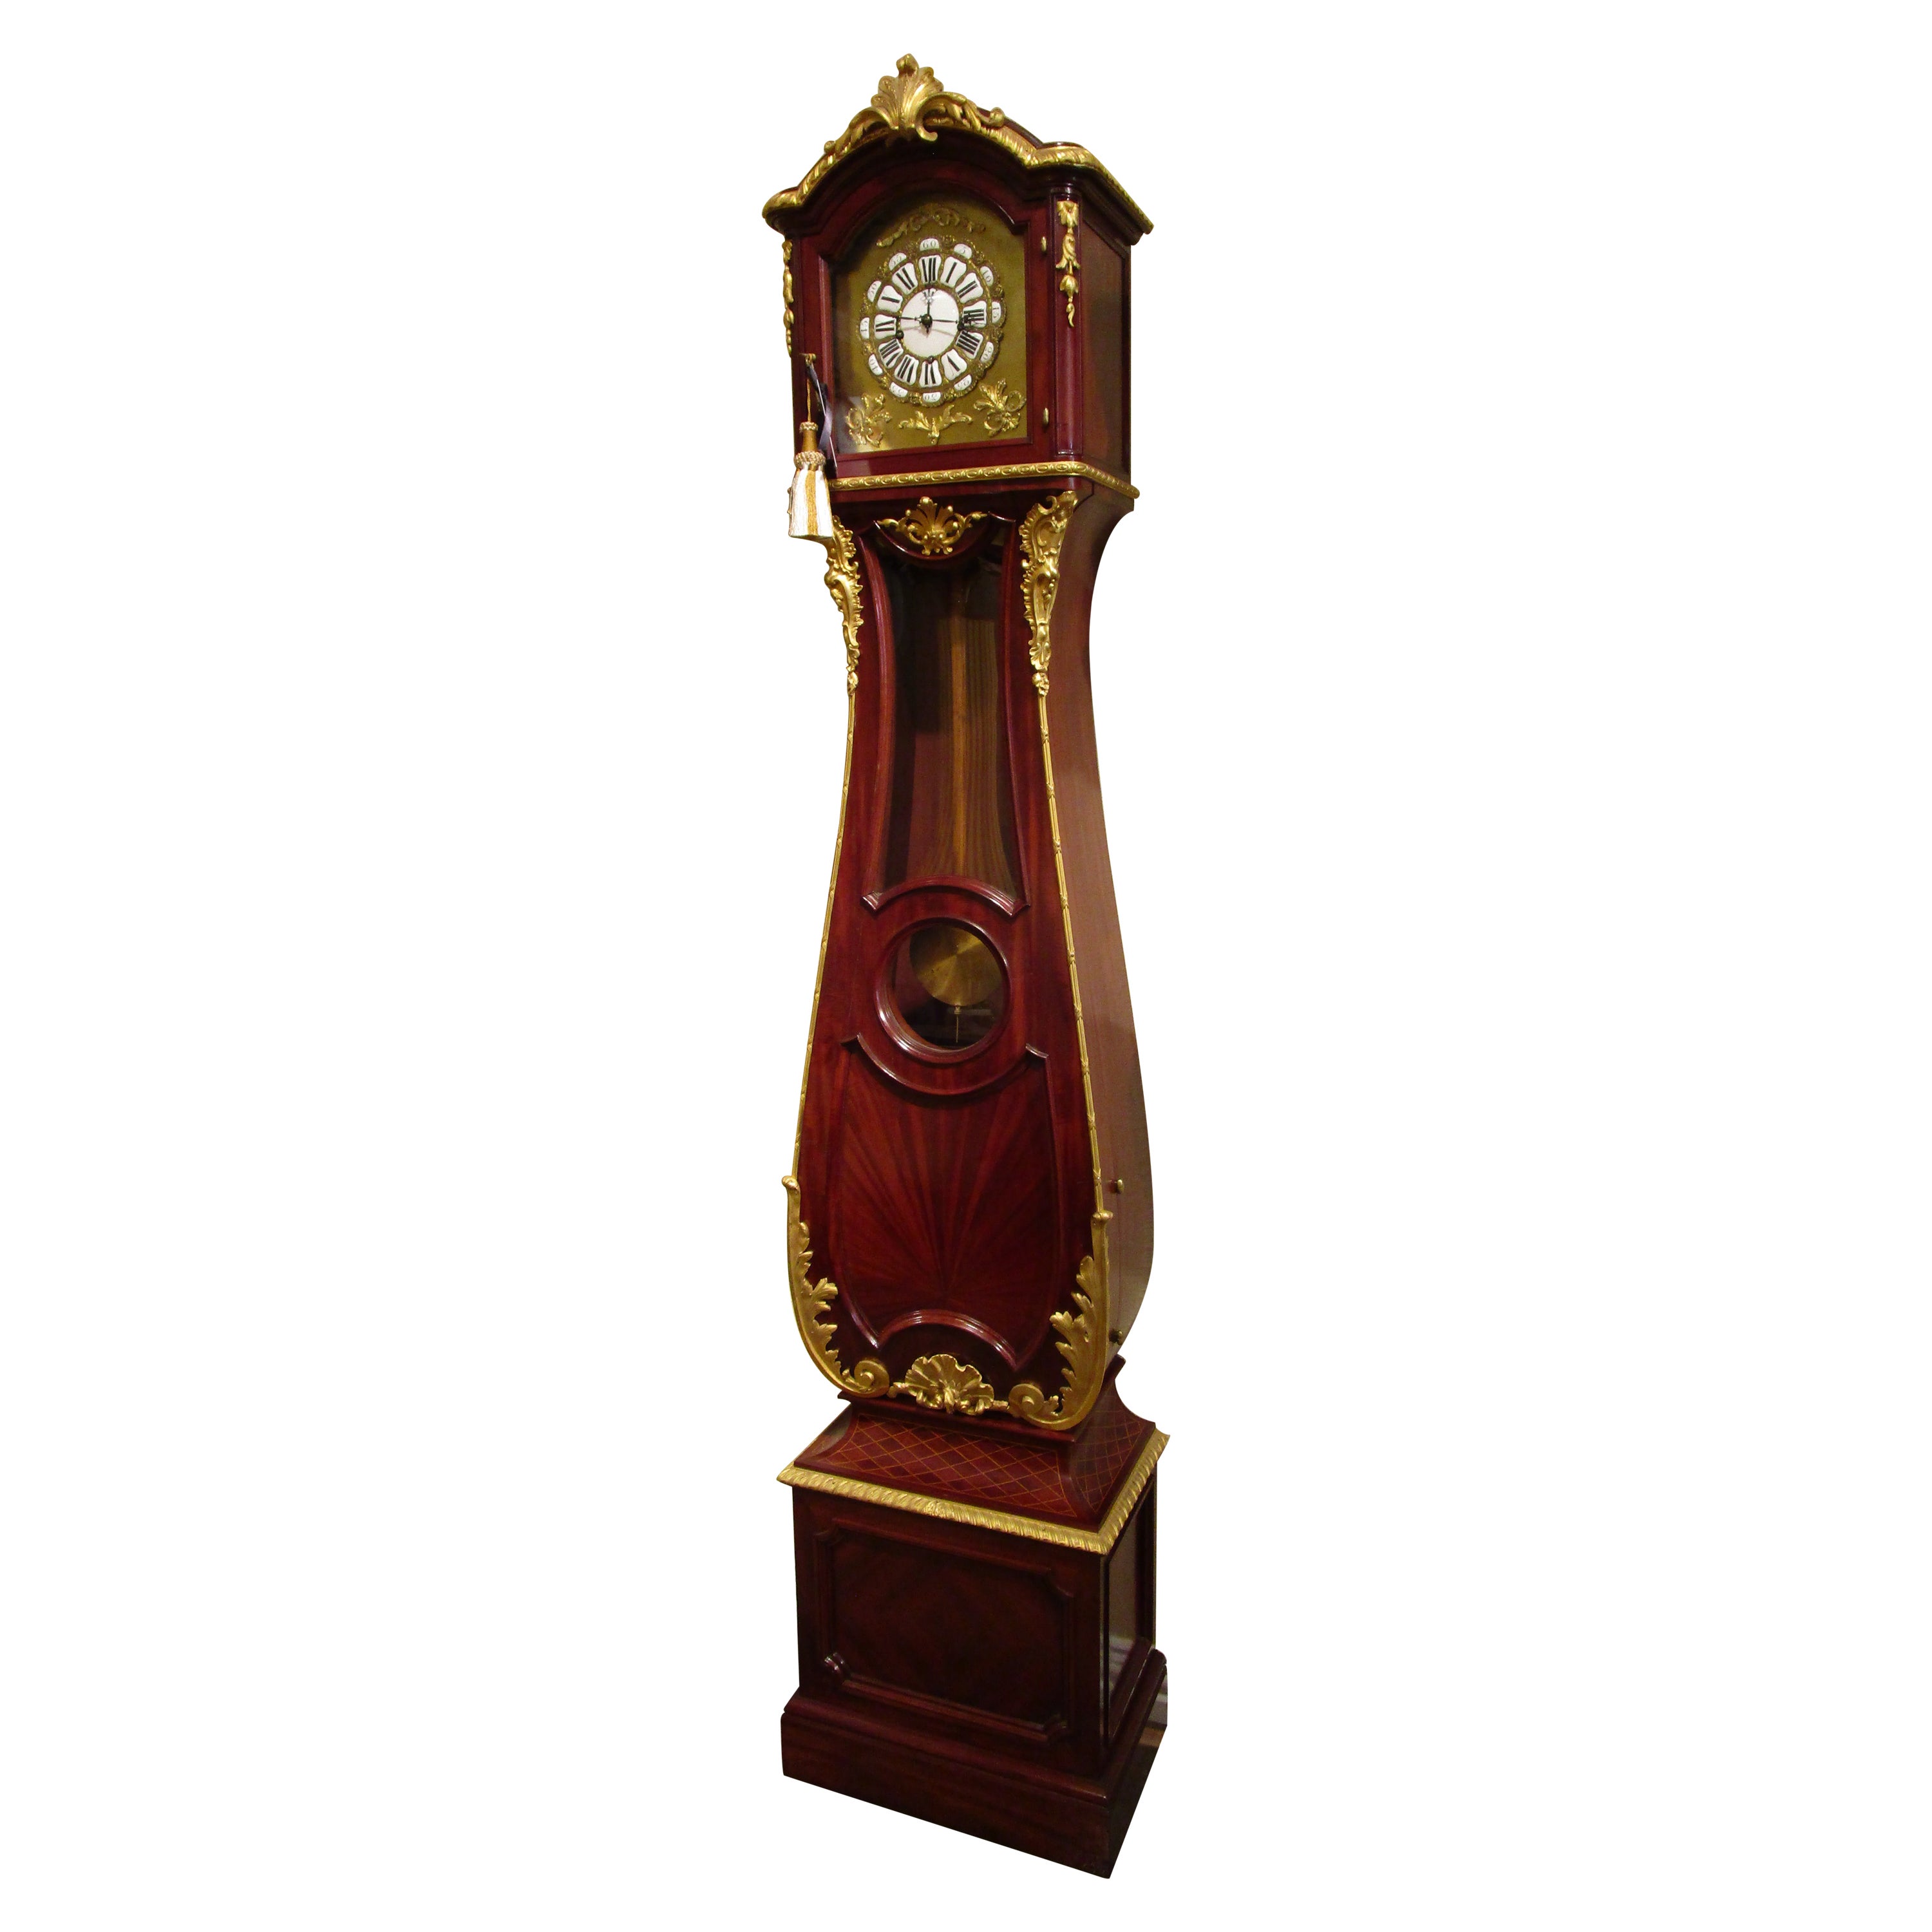 A  A.I.C., 19e siècle, acajou français  Horloge de grand-père incrustée de parquet. Bronze doré en vente